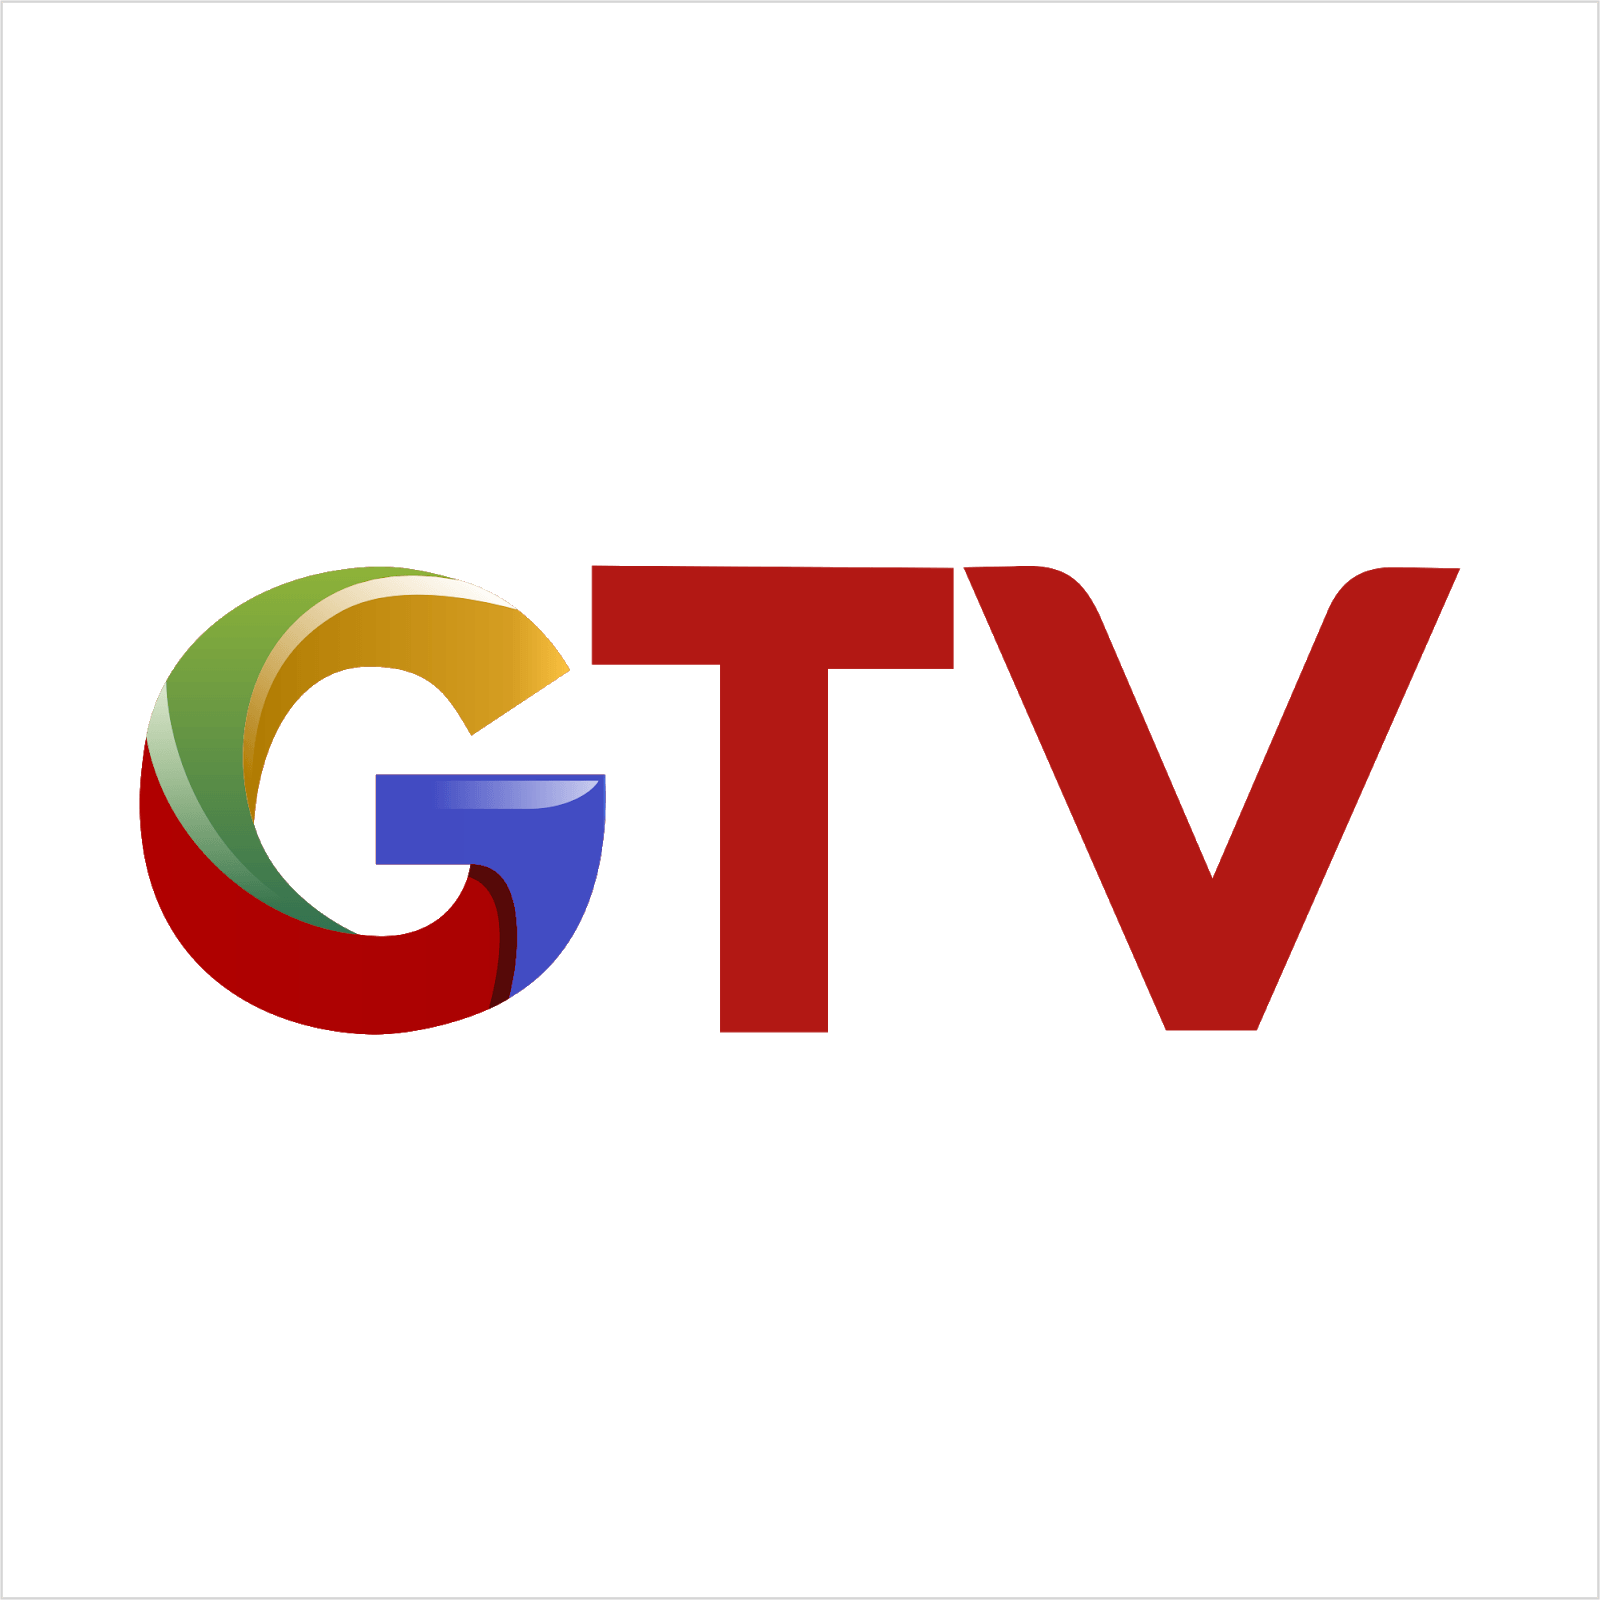 GTV Logo - GTV Logo vector (.cdr) Free Download - BlogoVector | Free Download ...